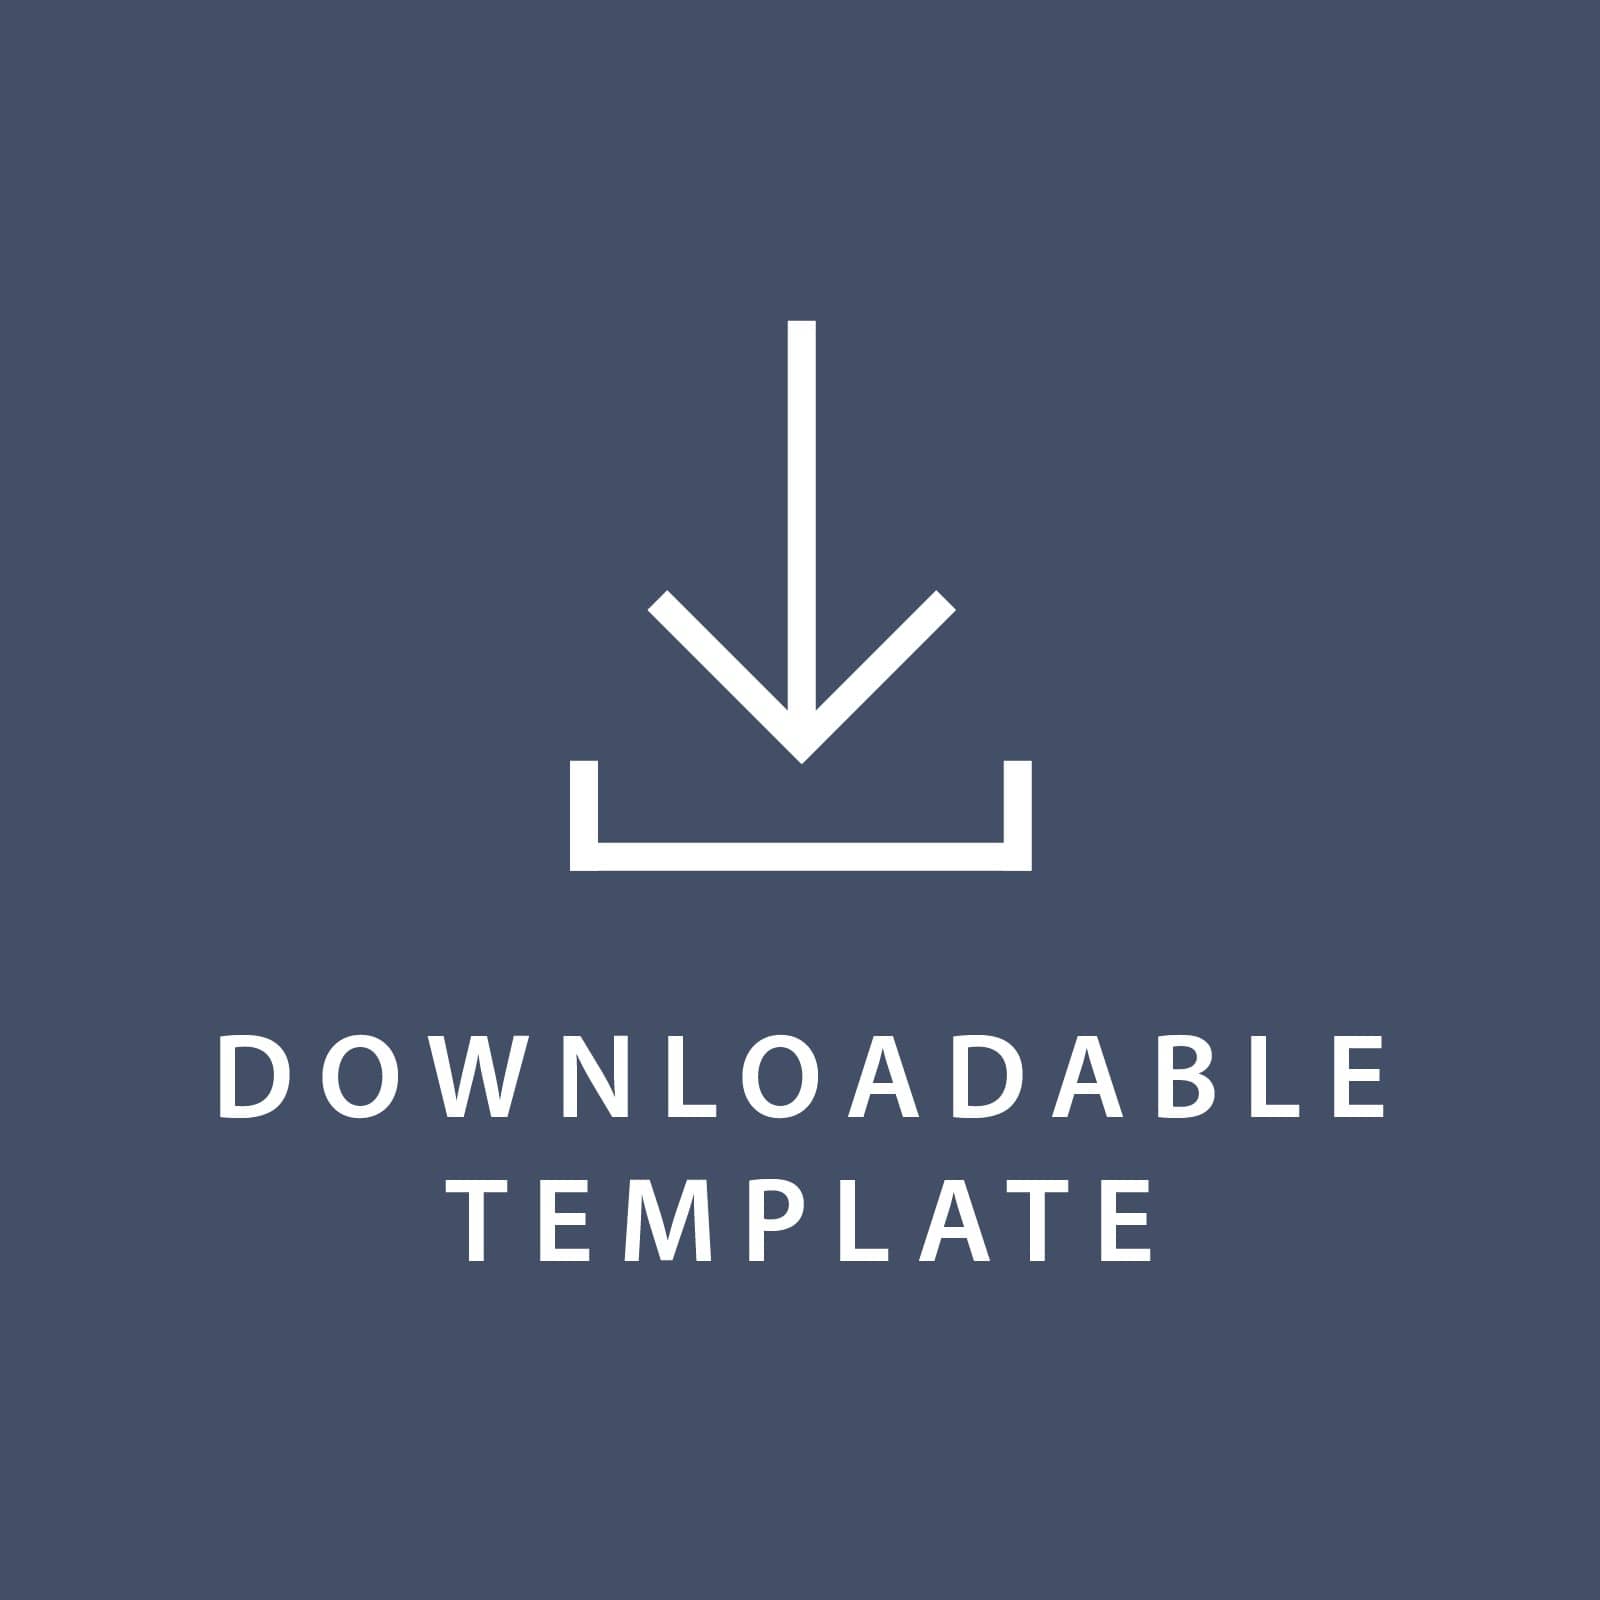 Template for 4.37 x 9 Labels Gartner Studios Template tmplt0868